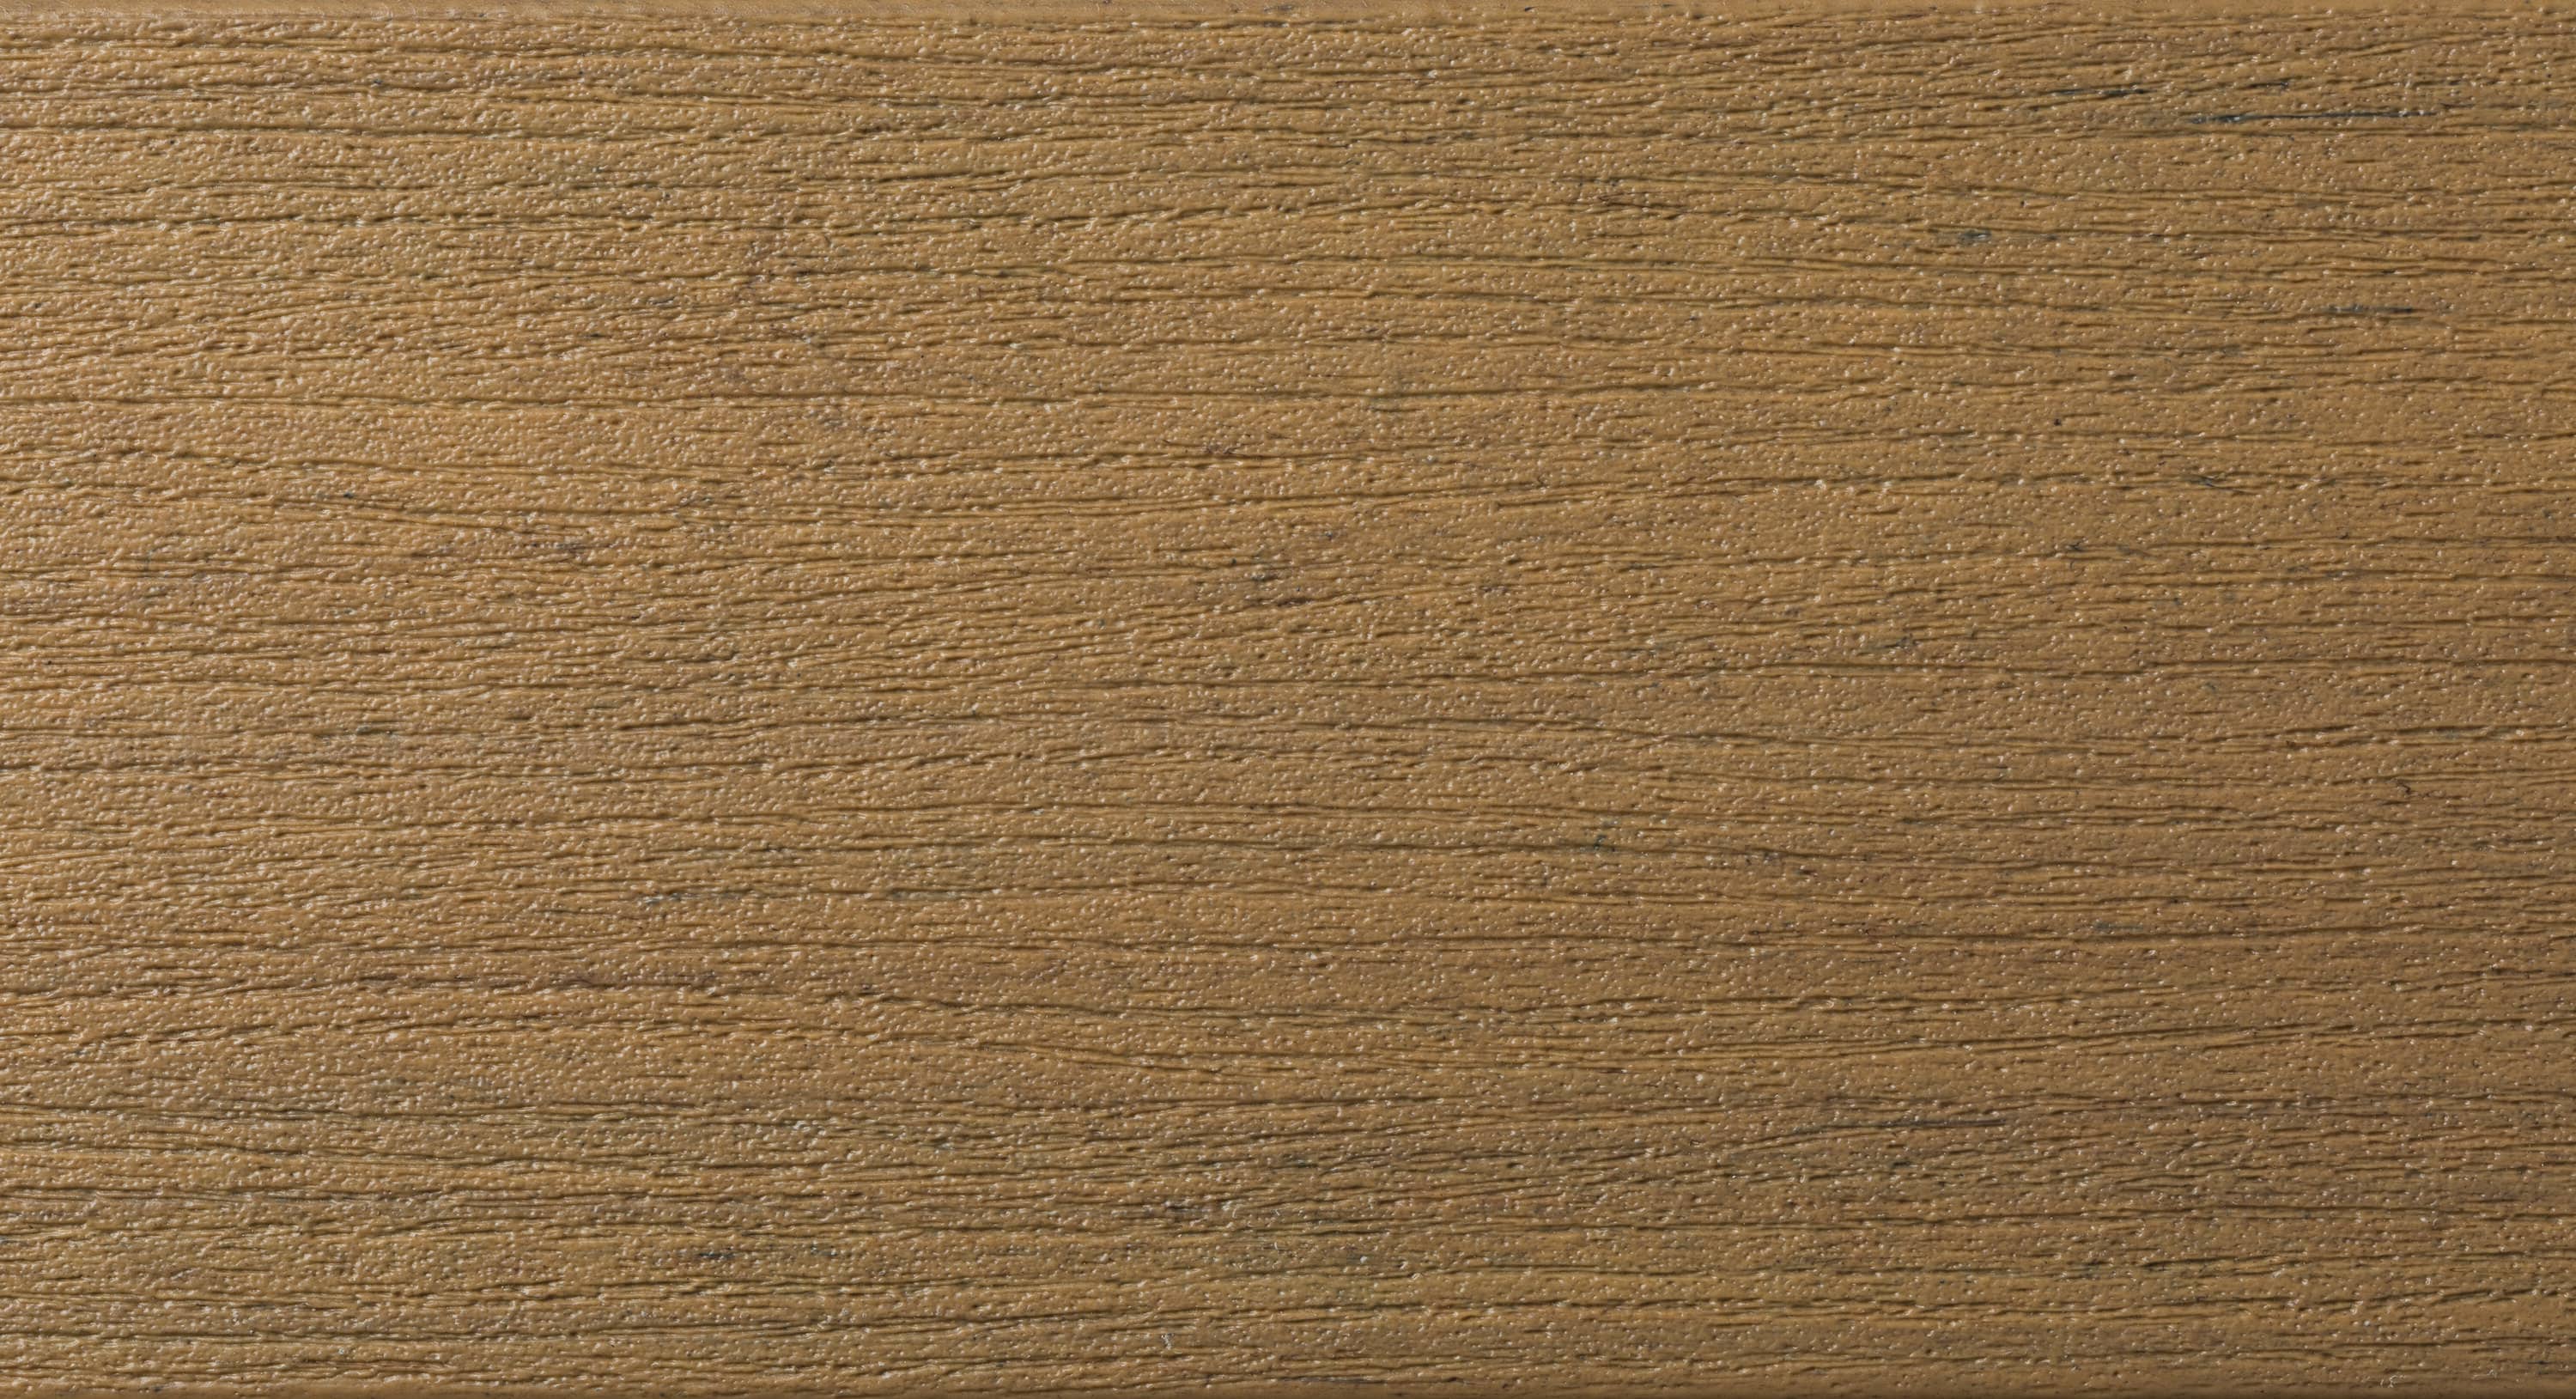 Prime+ 5/4-in x 6-in x 20-ft Coconut Husk Square Composite Deck Board in Brown | - TimberTech PR5420CH